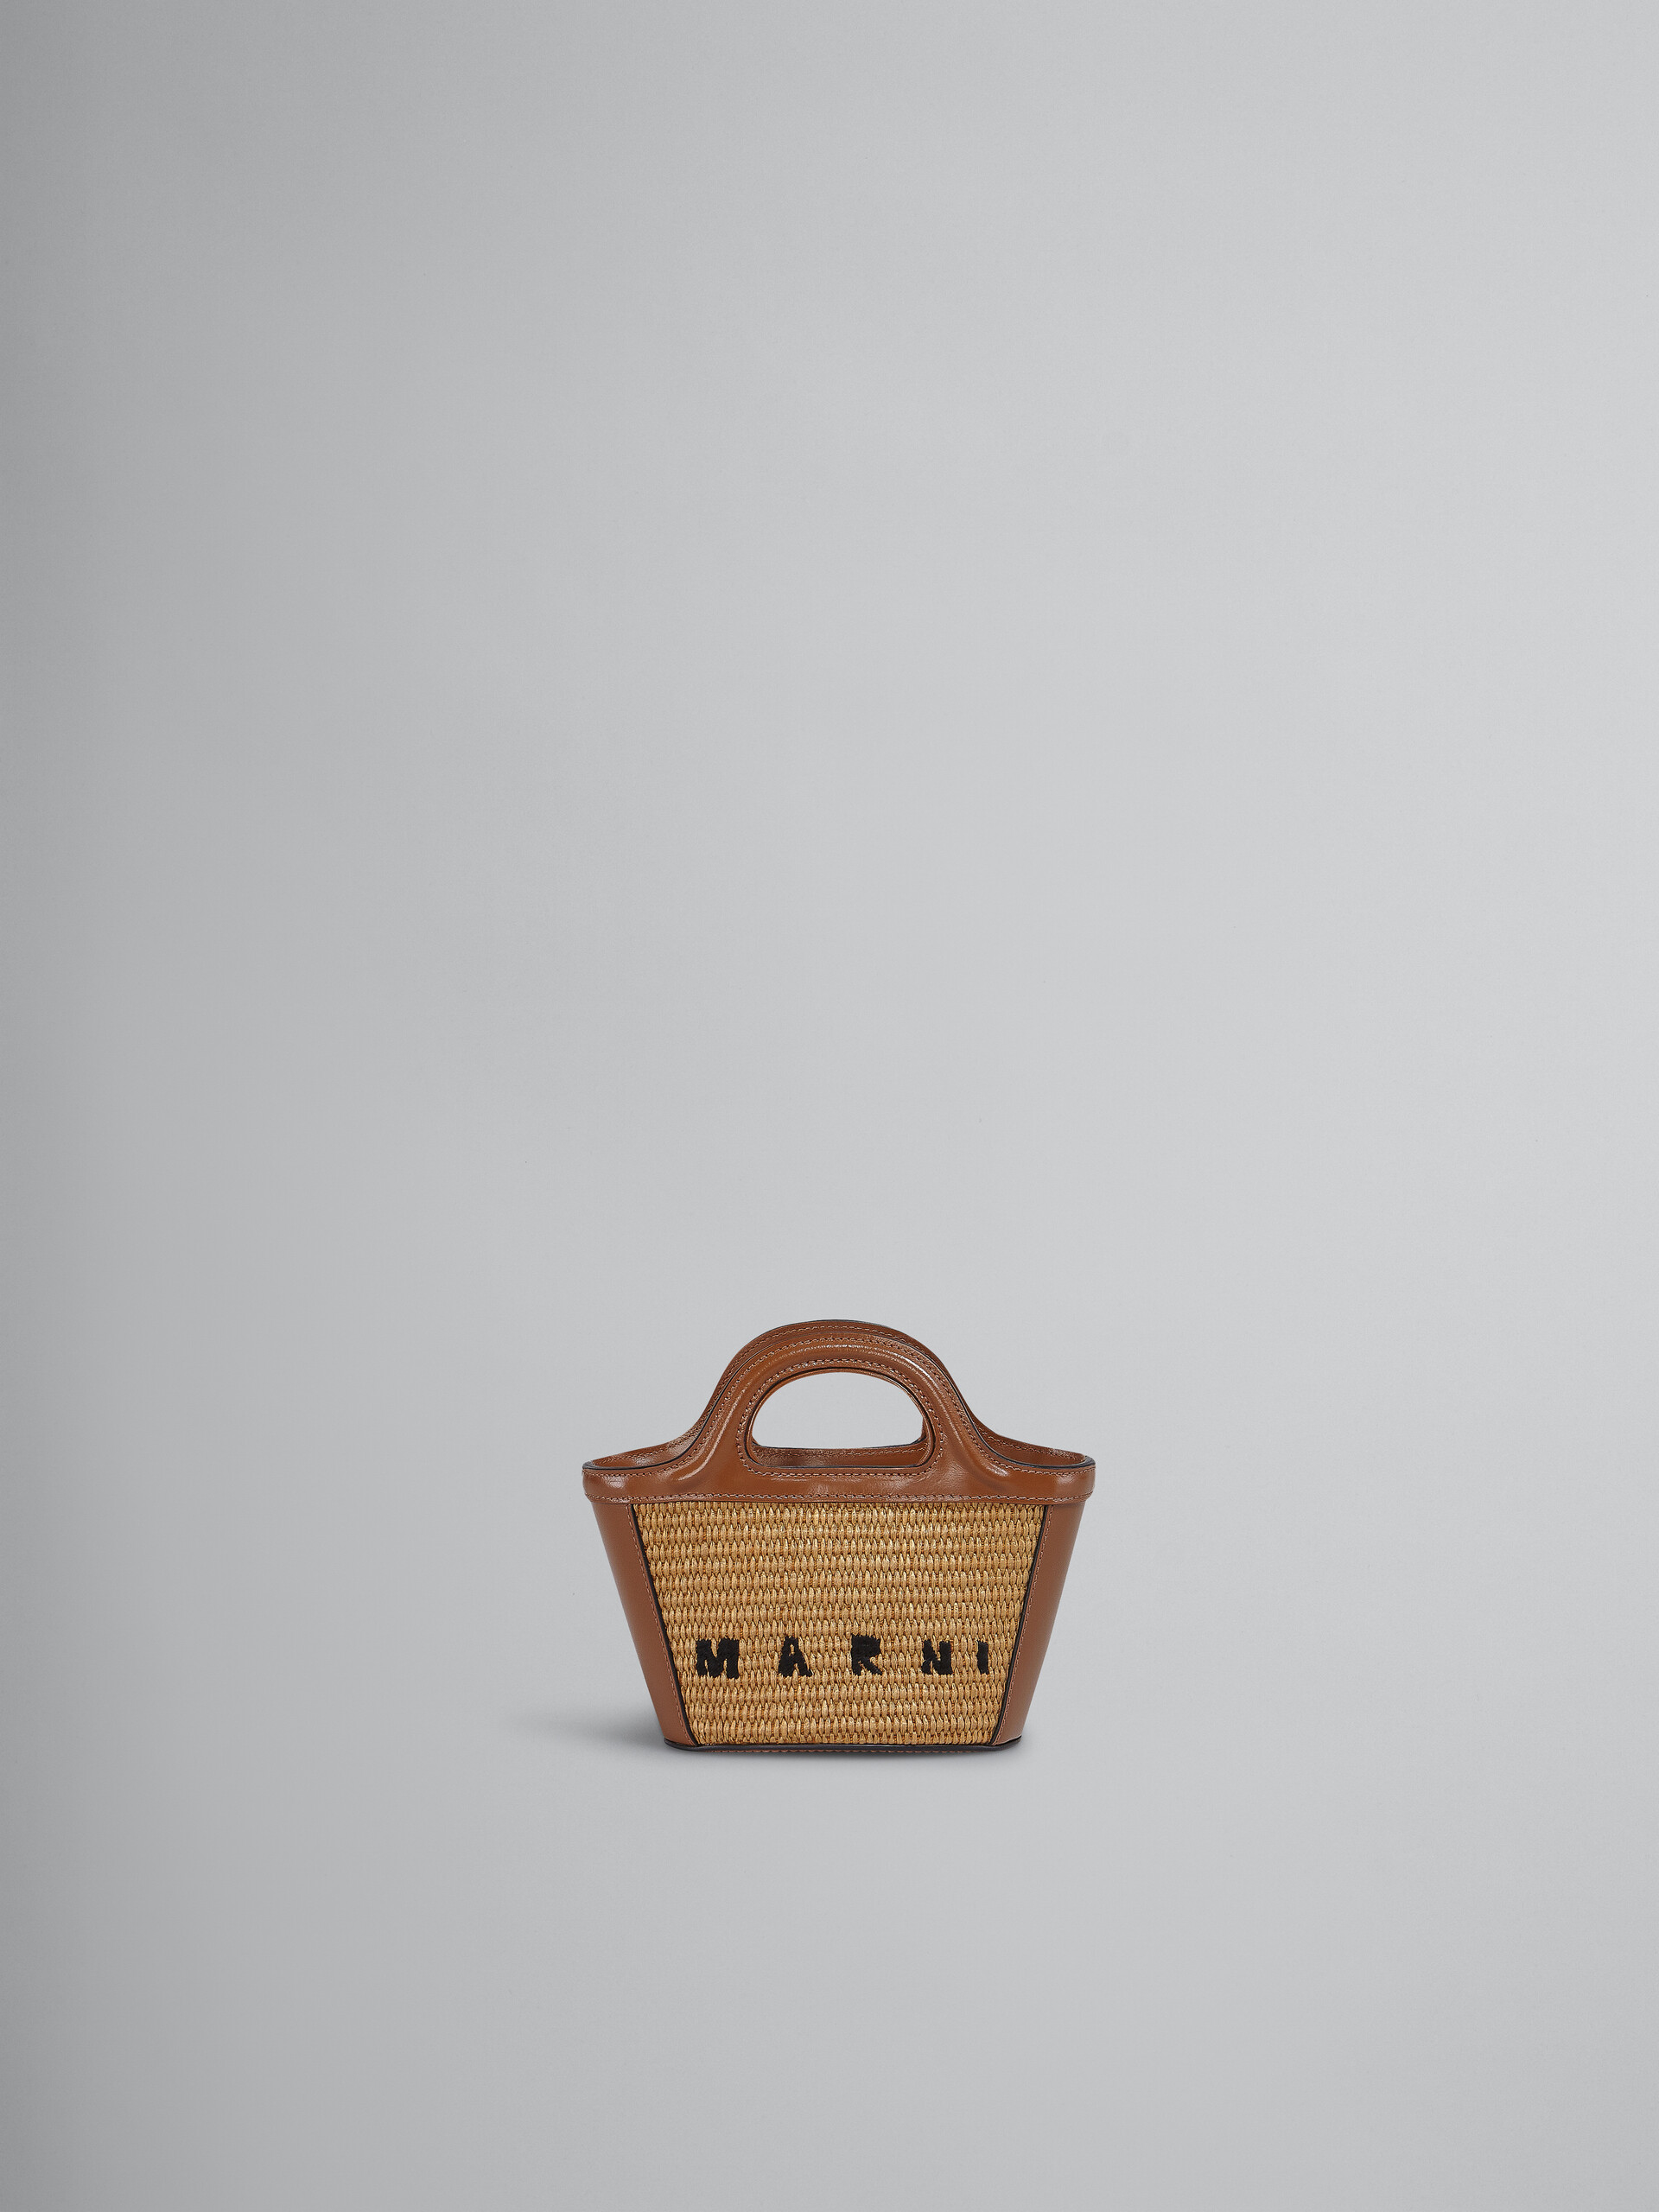 Tropicalia Micro Bag in brown leather and raffia - Handbag - Image 1